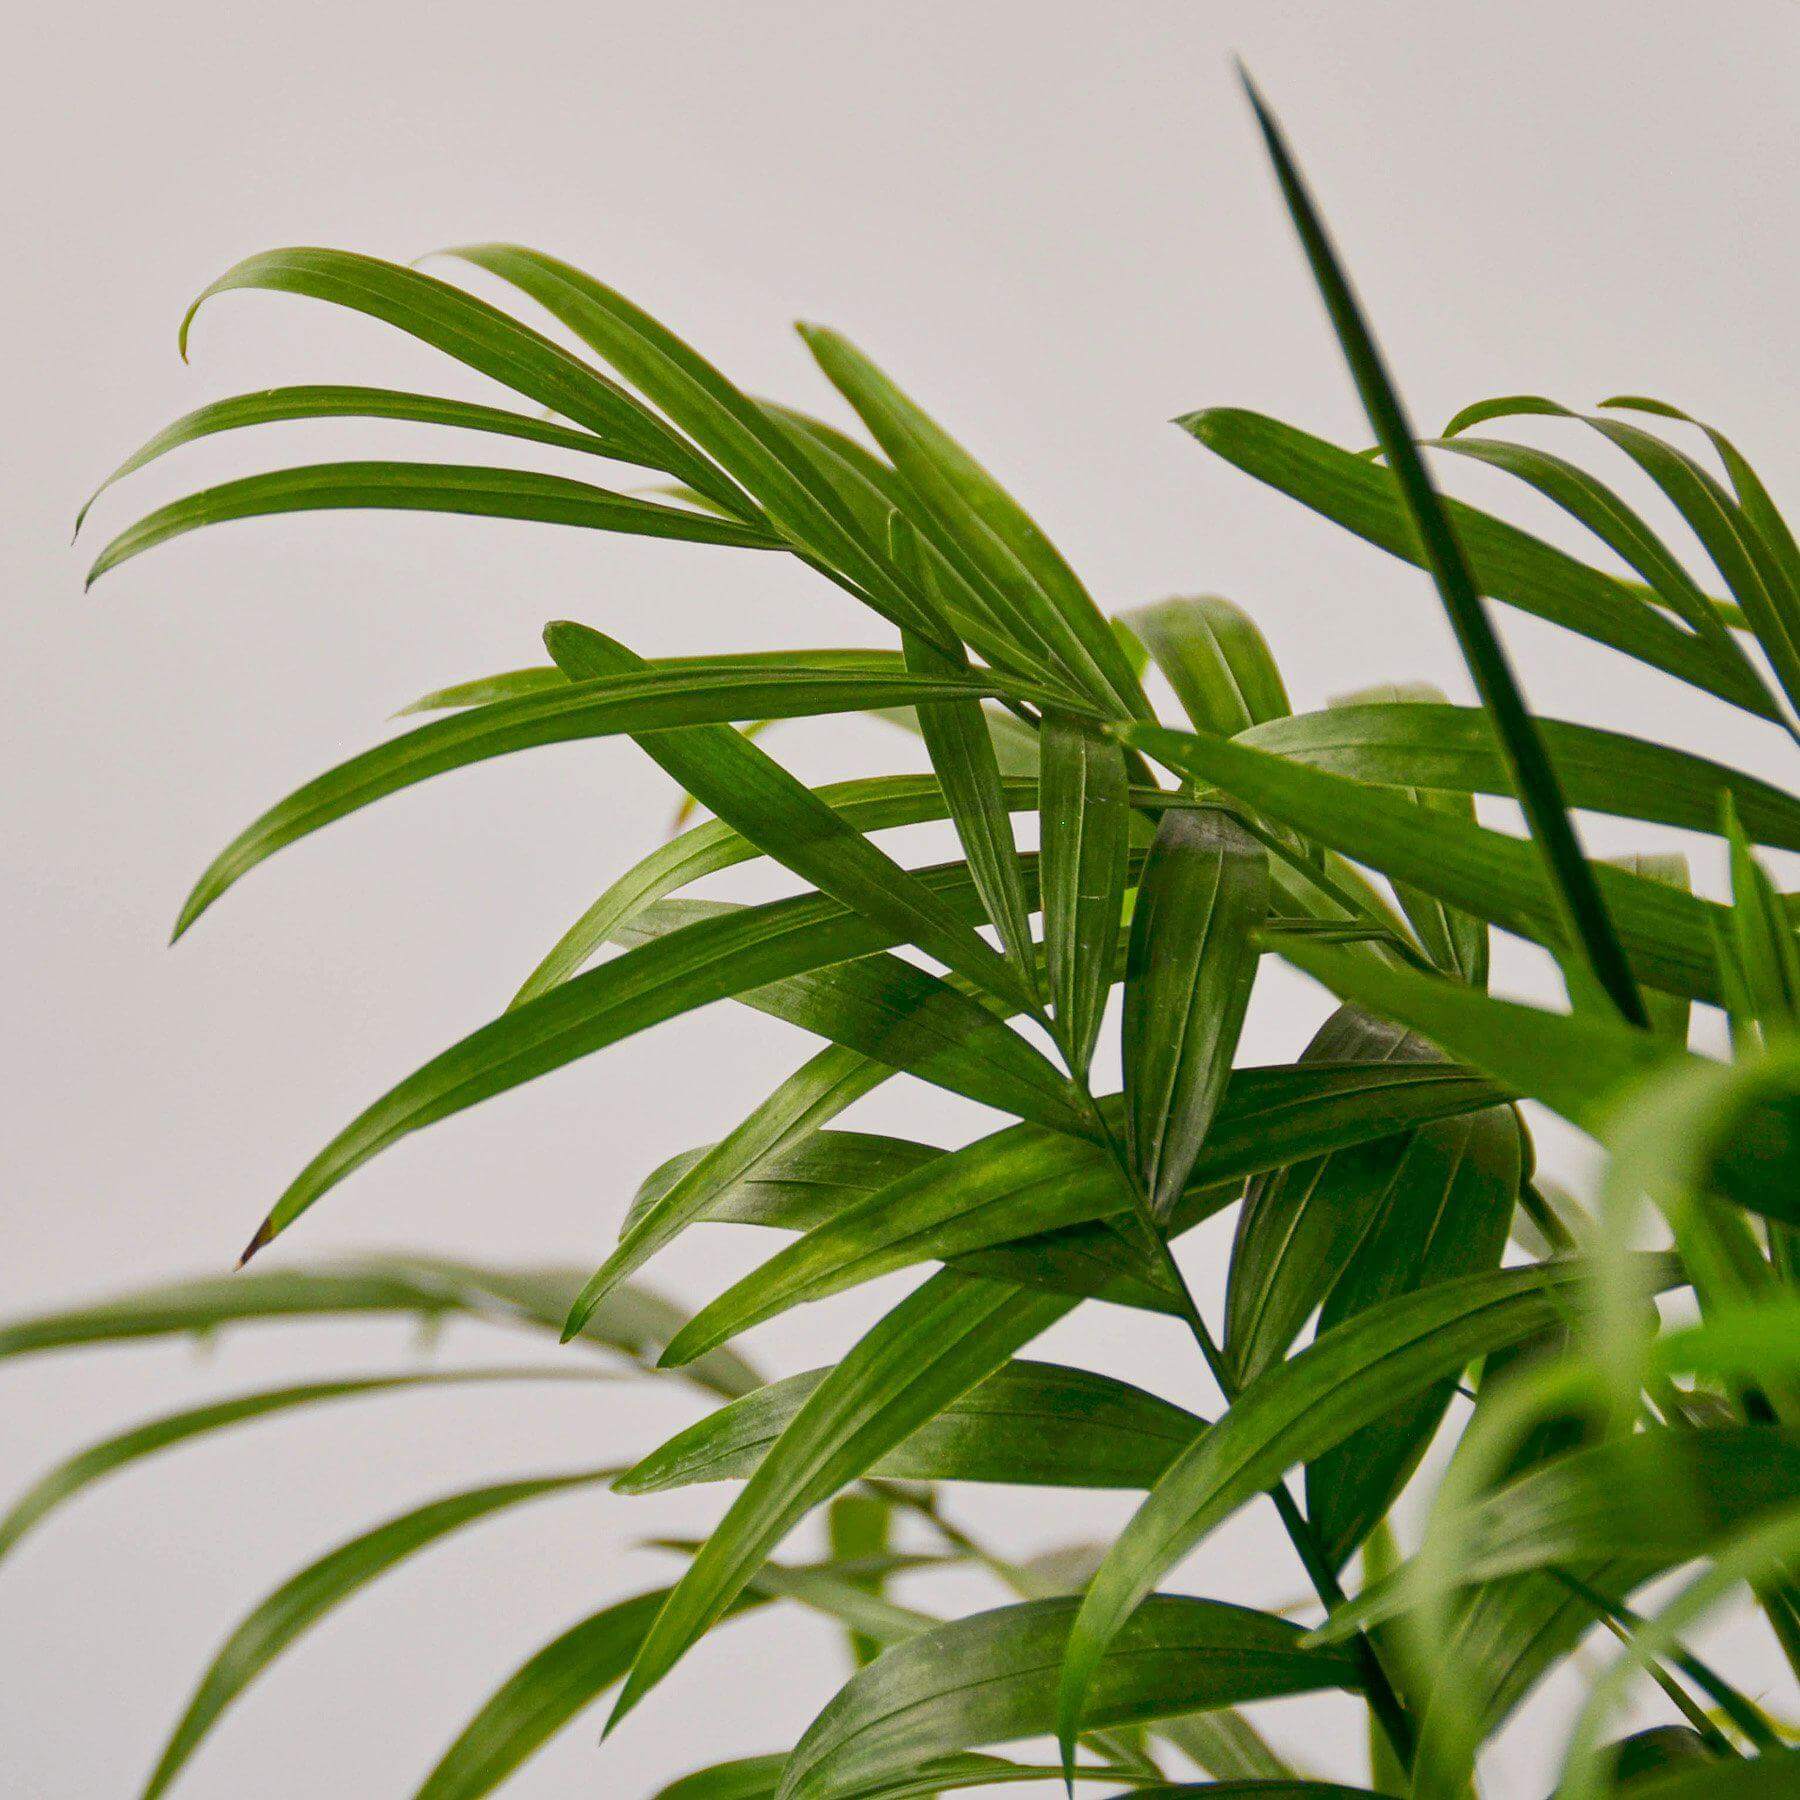 Parlor Palm | Modern house plants that clean the air